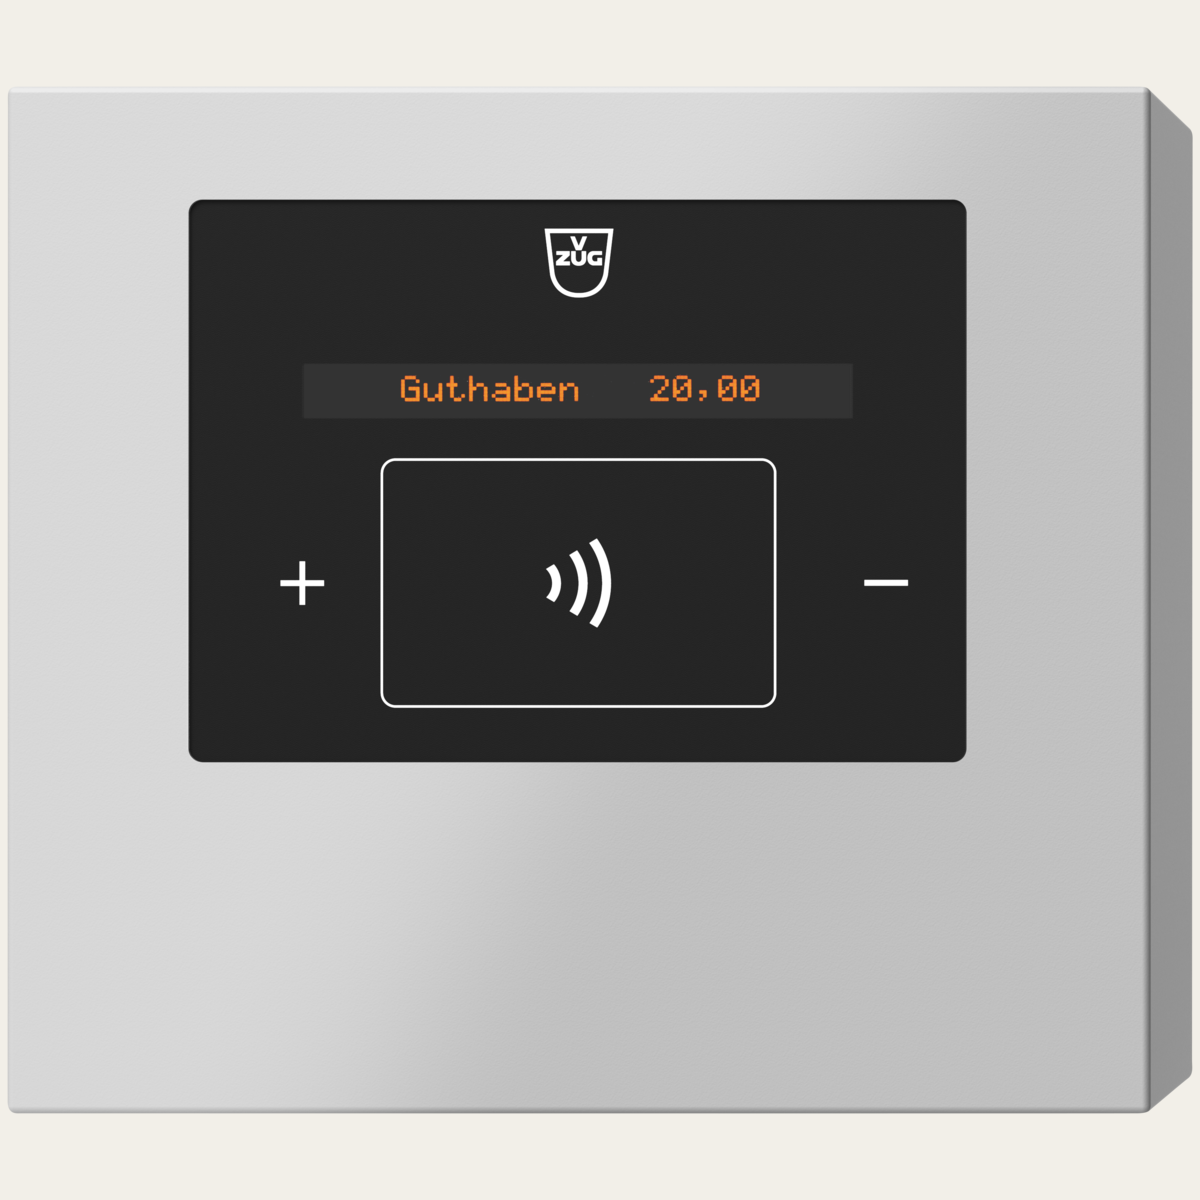 V-ZUG Till system Card-System 1, for operating 1 appliance